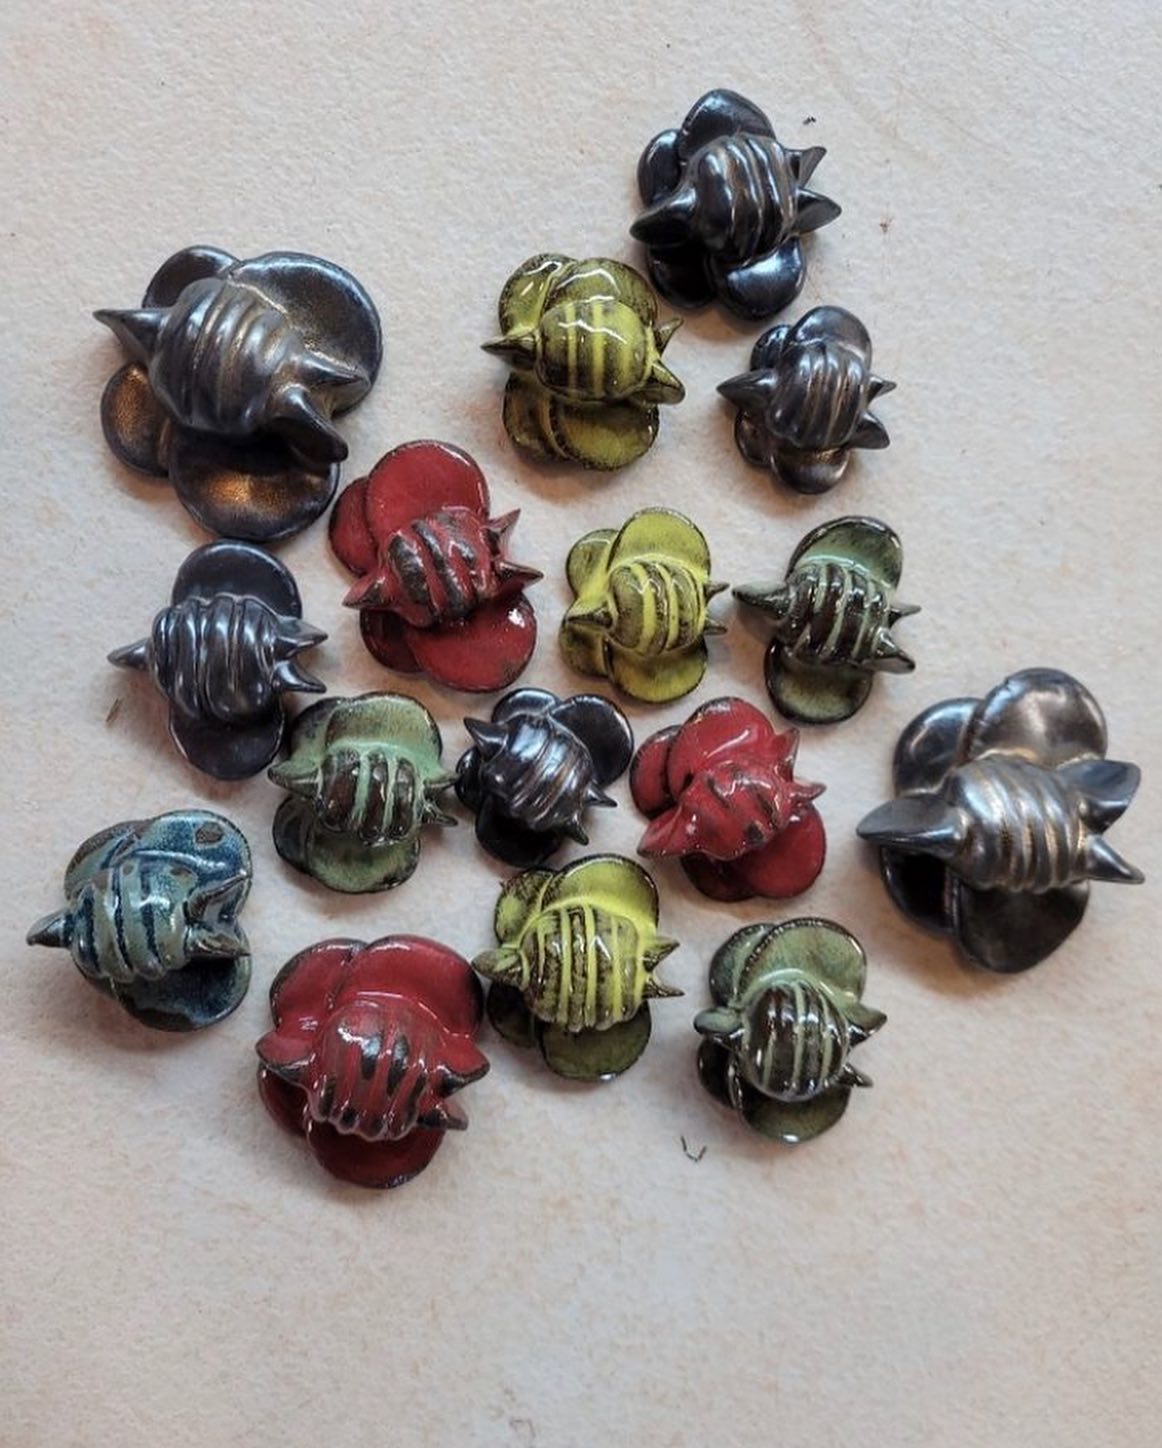 Ceramic bee magnets, cone 6, by Sienna Mae Heath